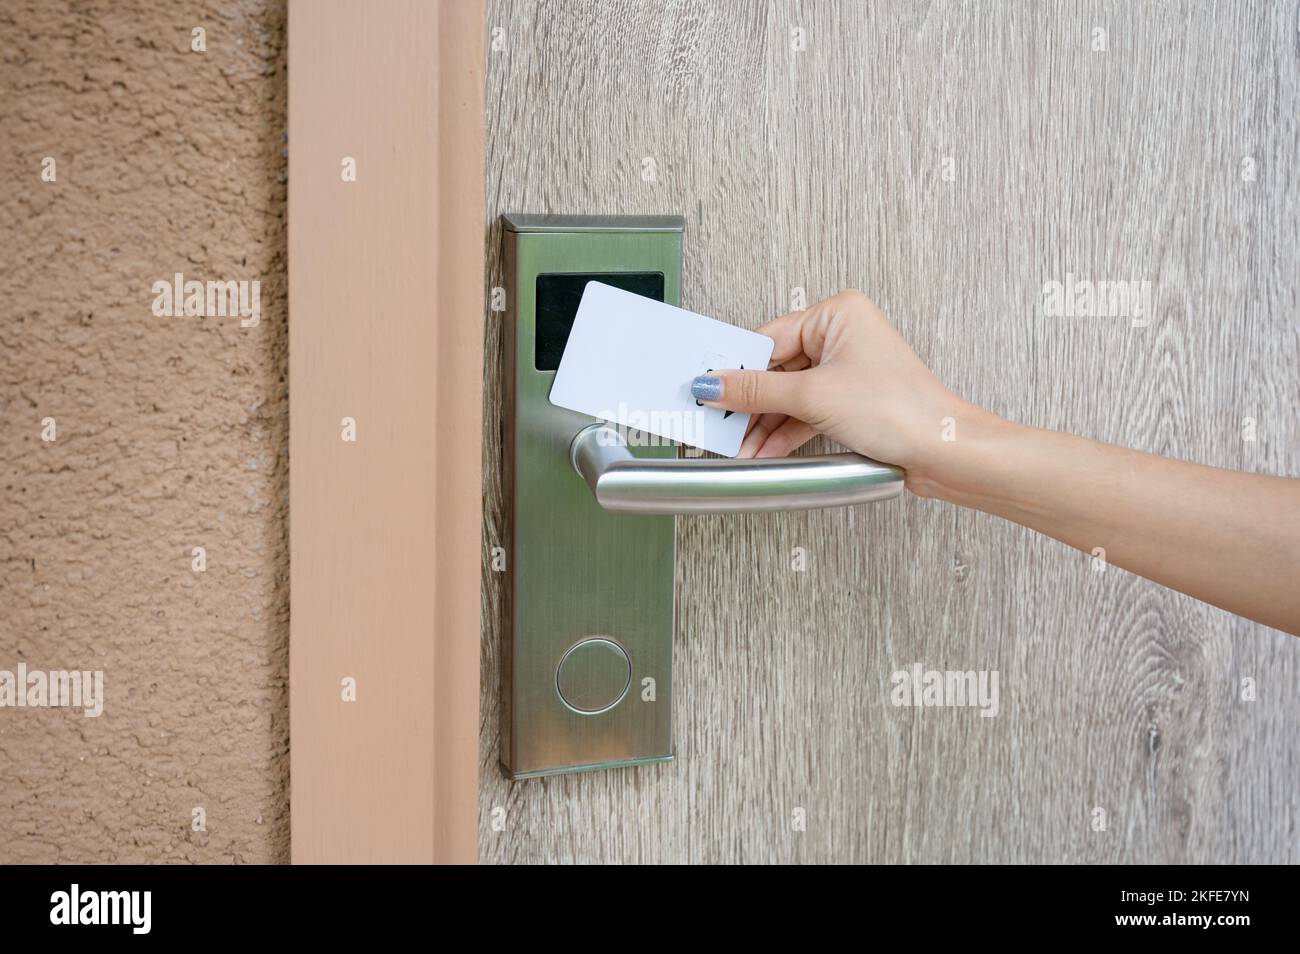 Hand holding key card scanning to unlock wooden door at resort. Digital door scanner access control security system Stock Photo